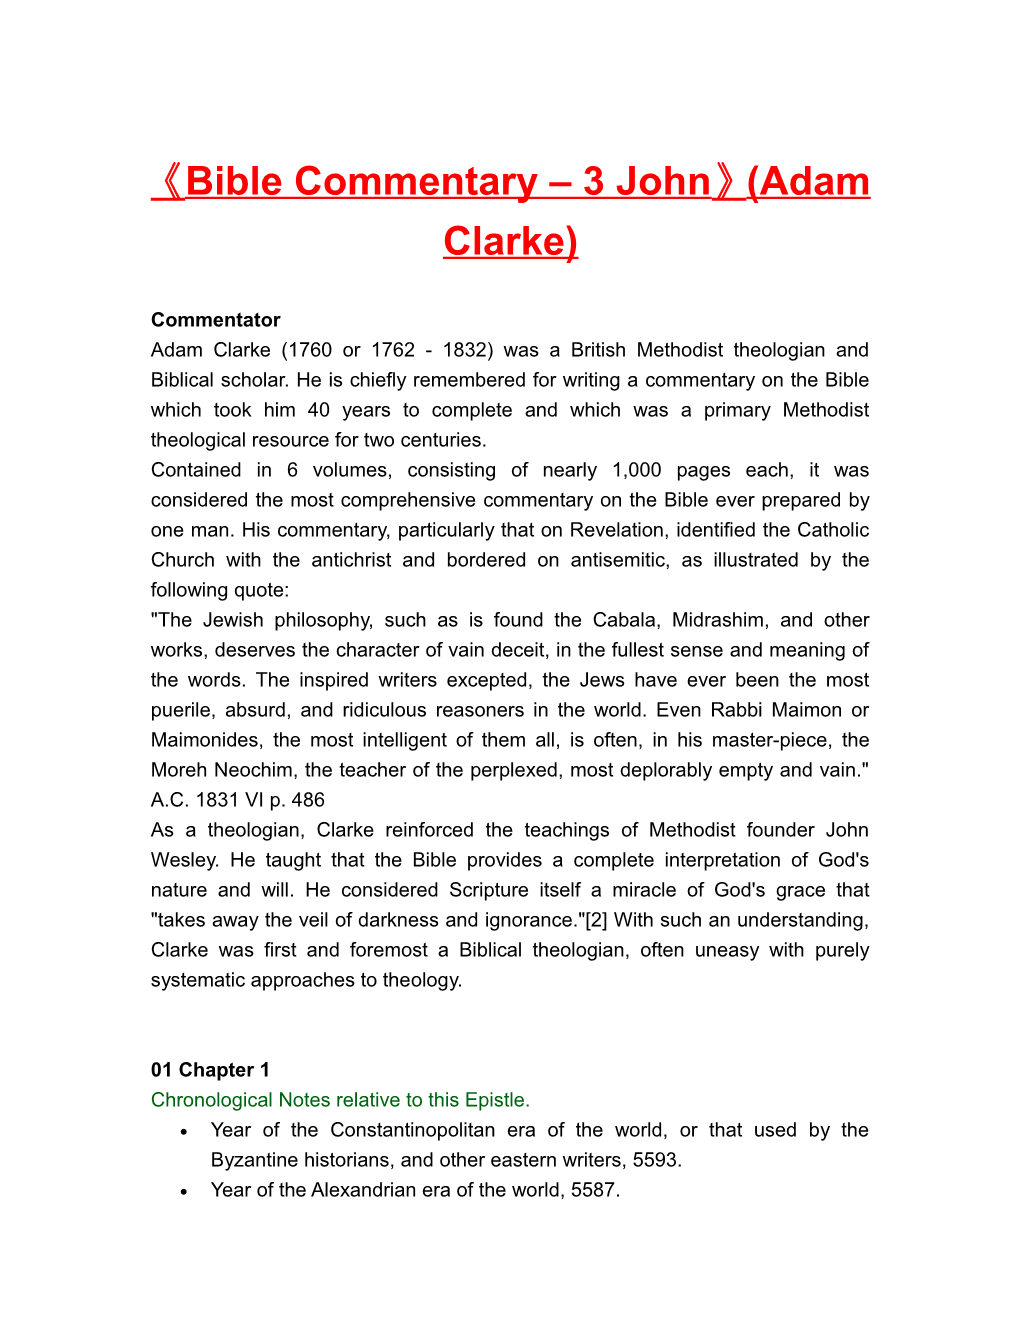 Bible Commentary 3 John (Adam Clarke)